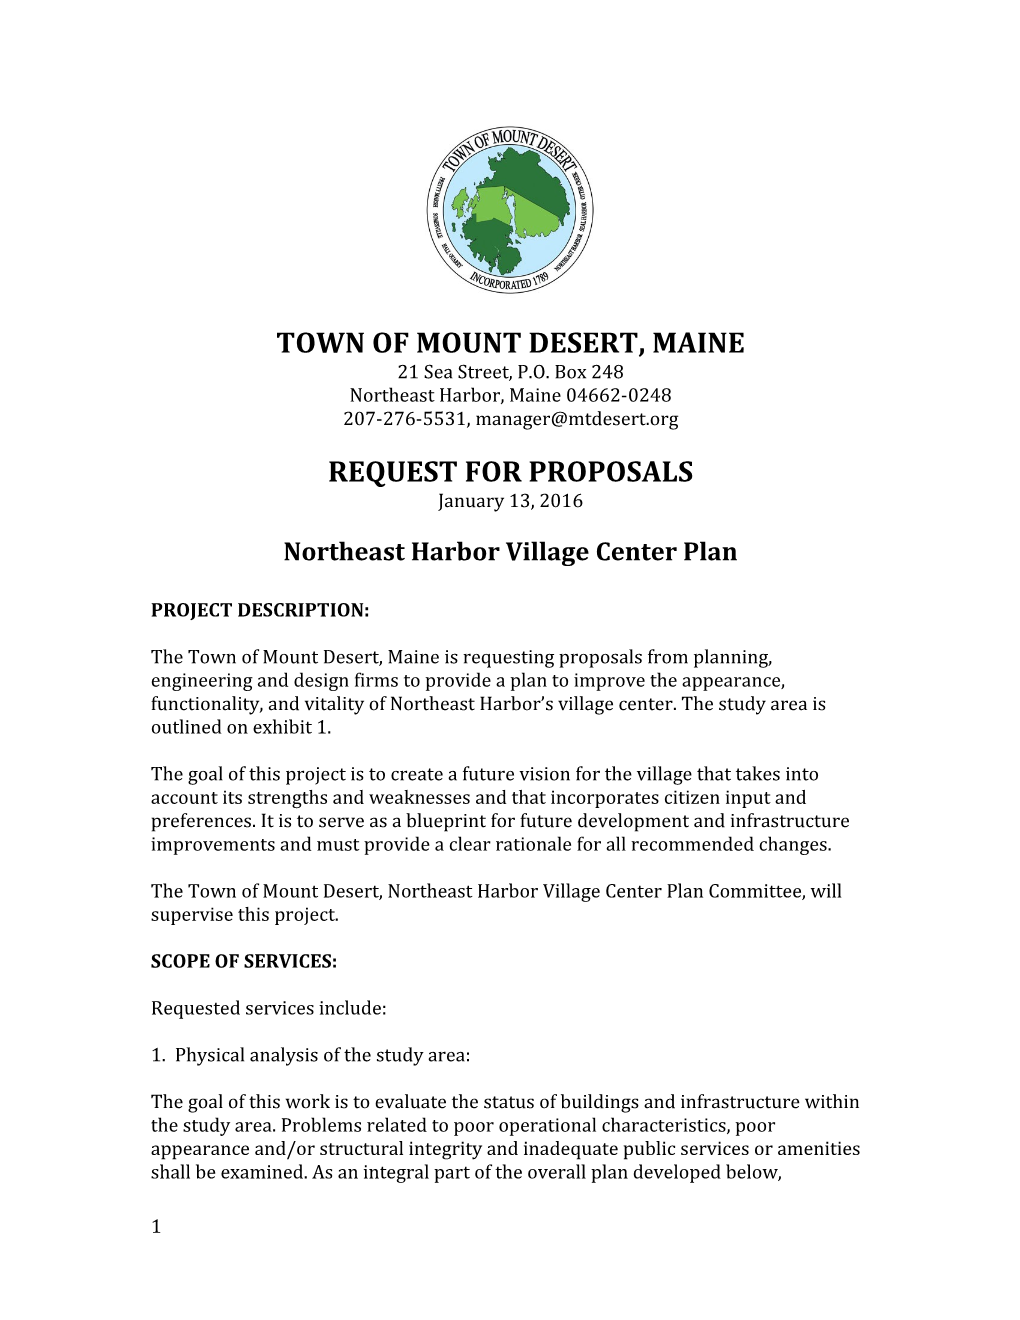 Town of Mount Desert, Maine